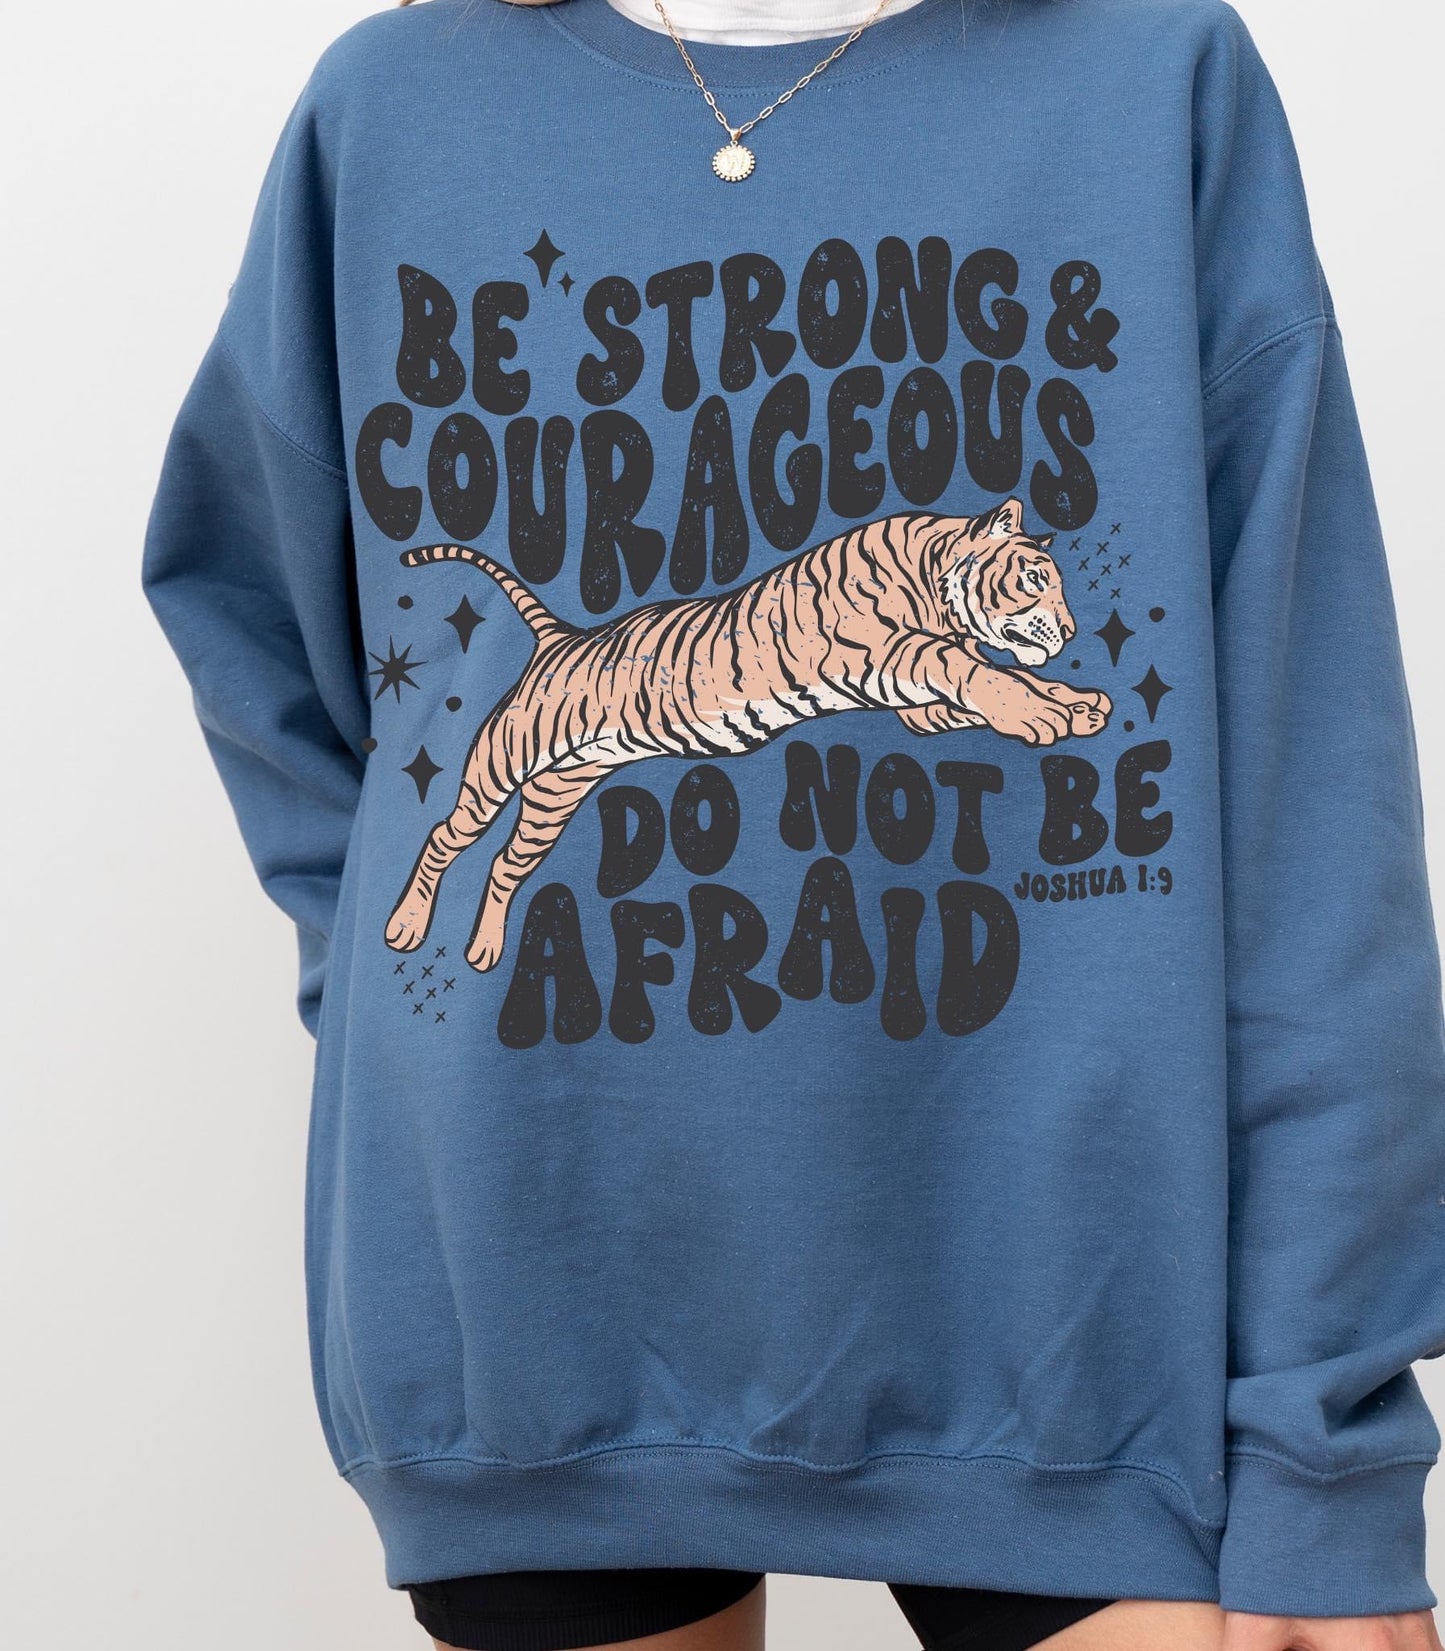 Be strong & courageous crewneck